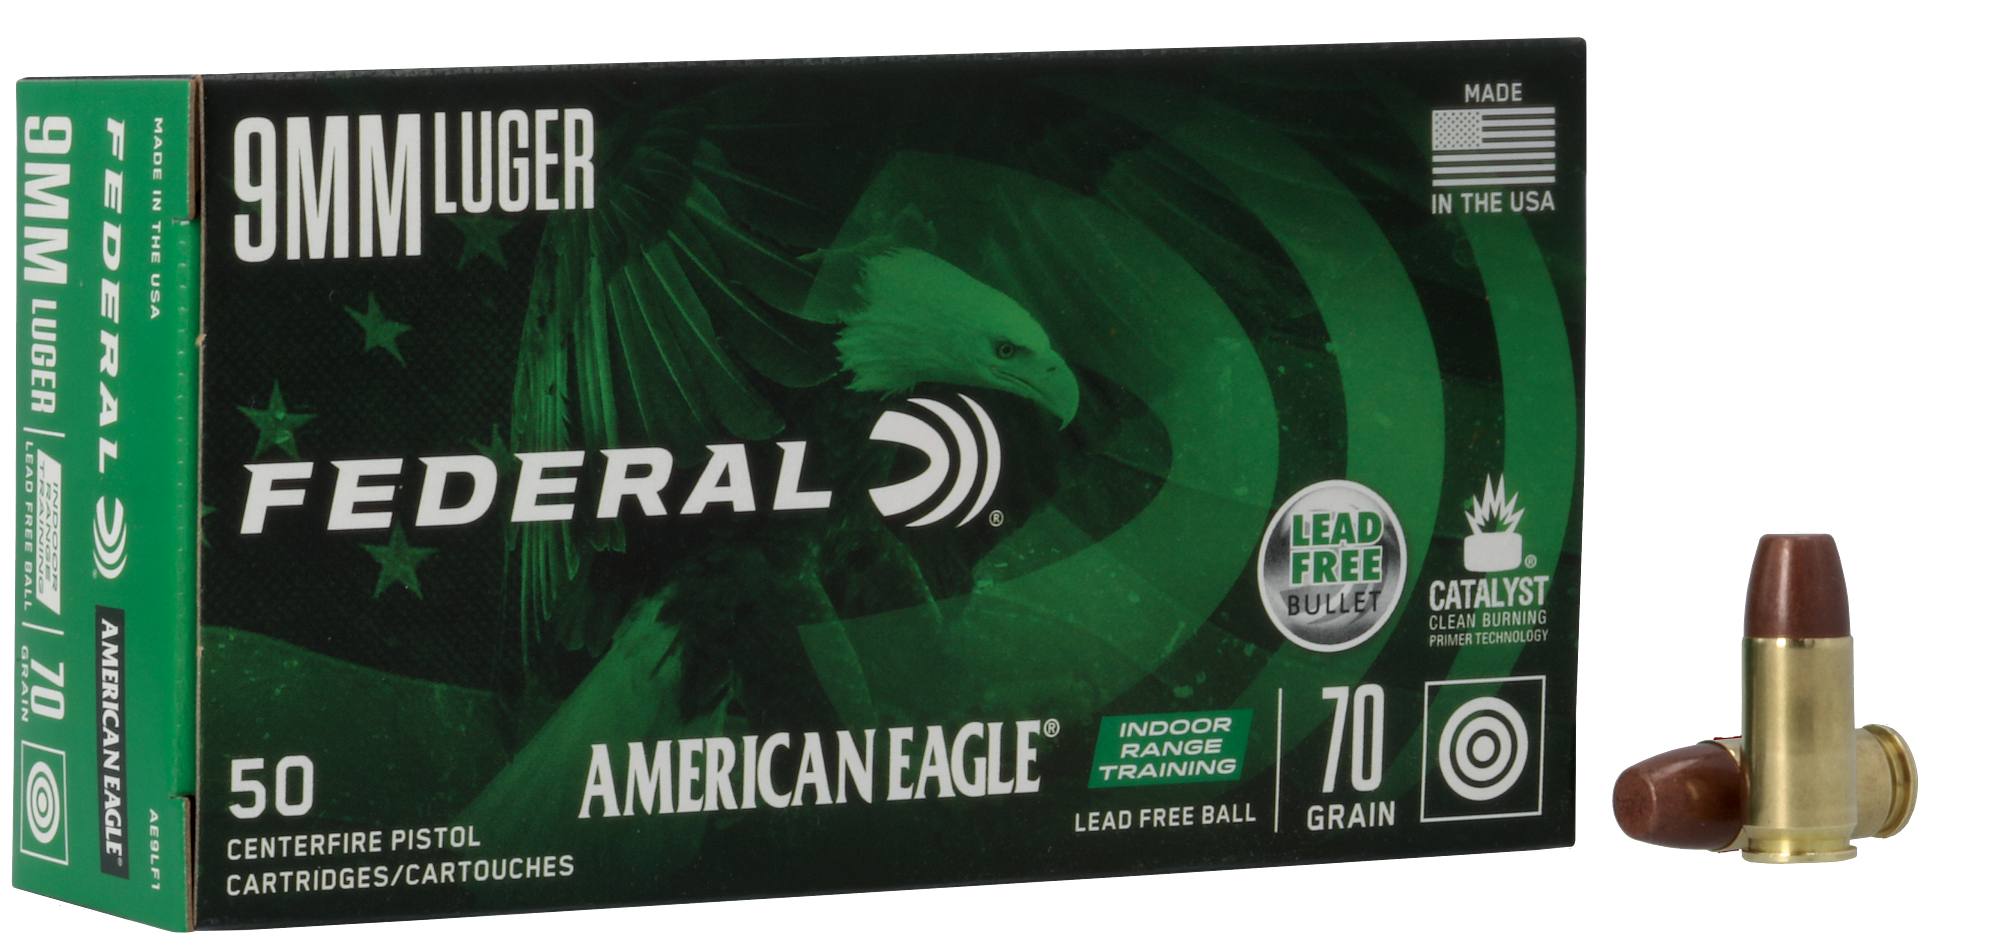 Buy American Eagle Indoor Range Training Lead Free for USD 31.99